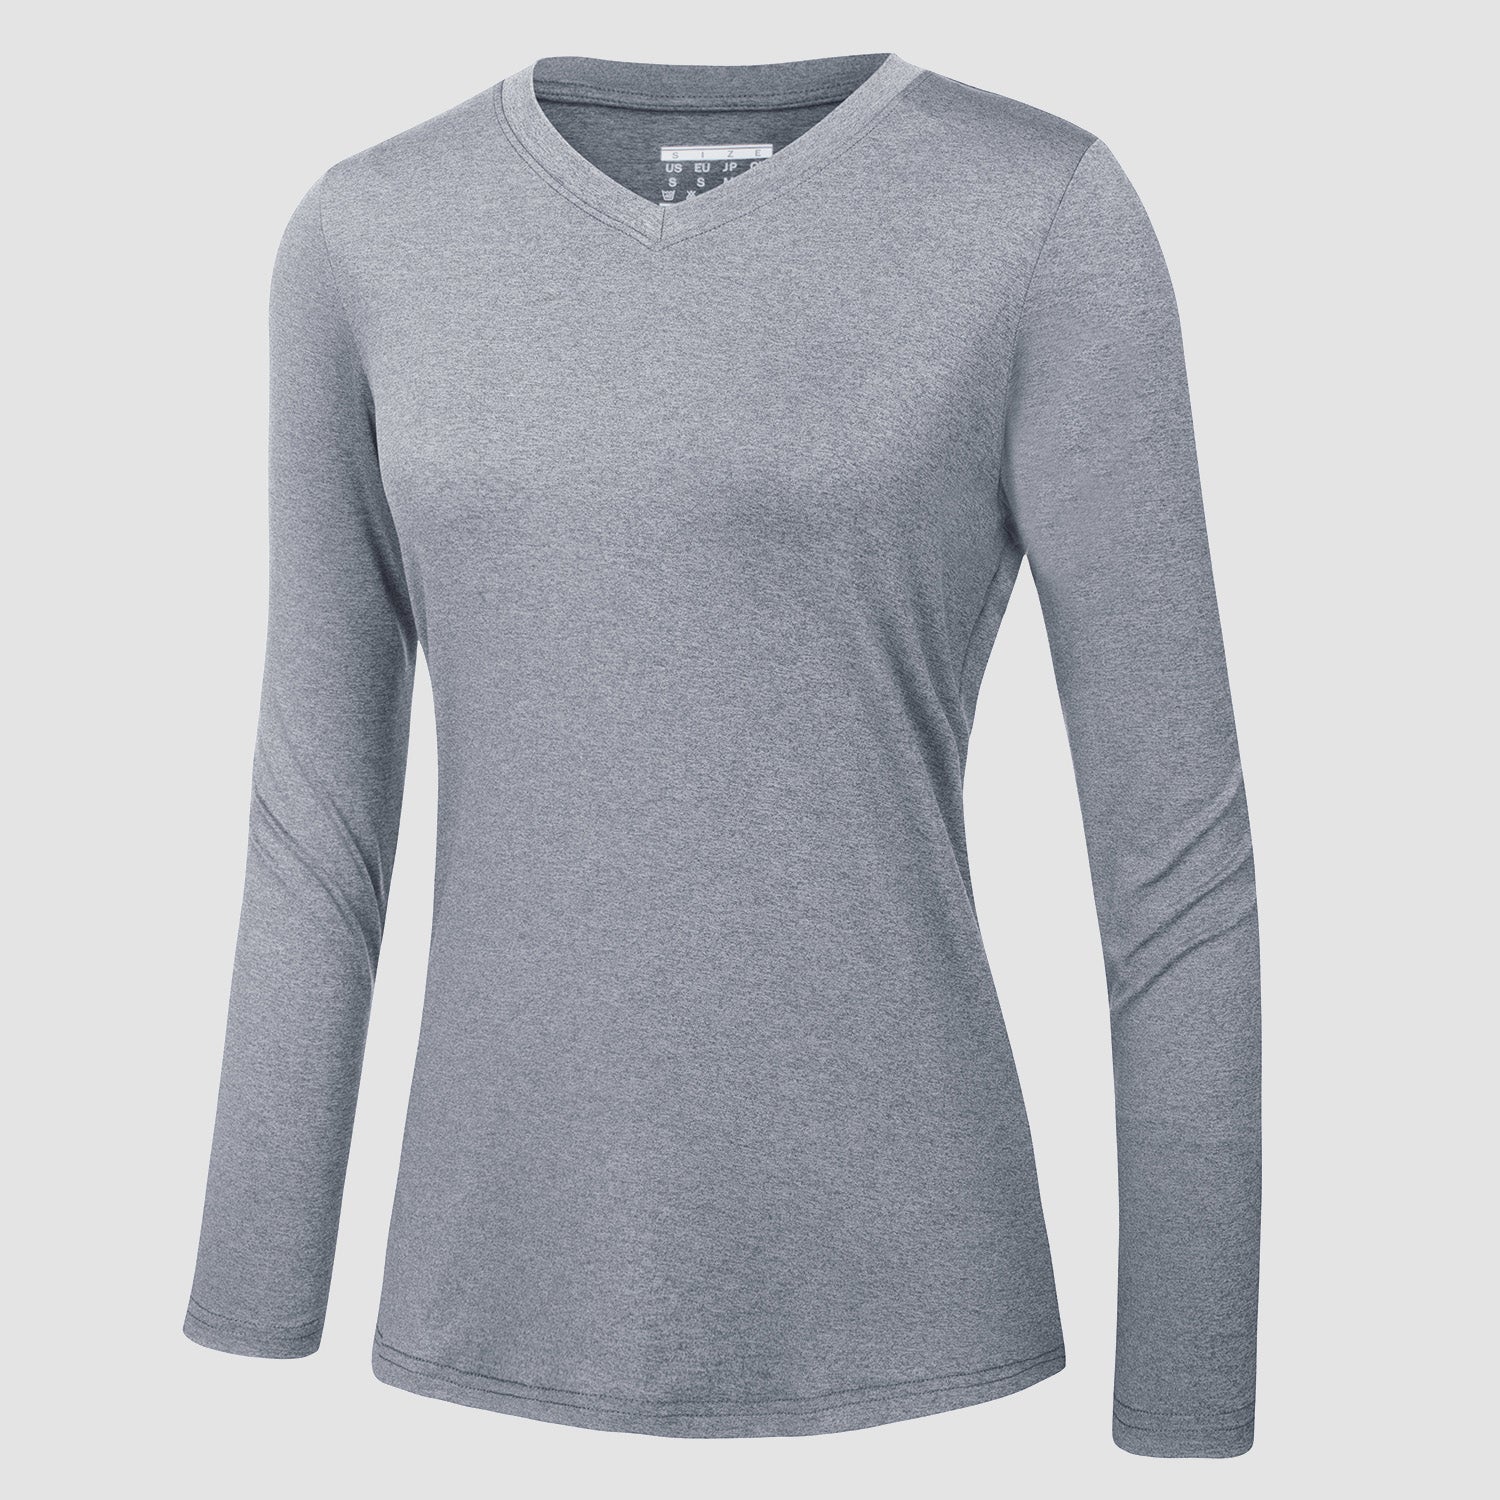 Women's Long Sleeve Shirt V Neck SPF Shirts UPF 50+ Quick Dry Workout Hiking Tee Shirts Rashguard